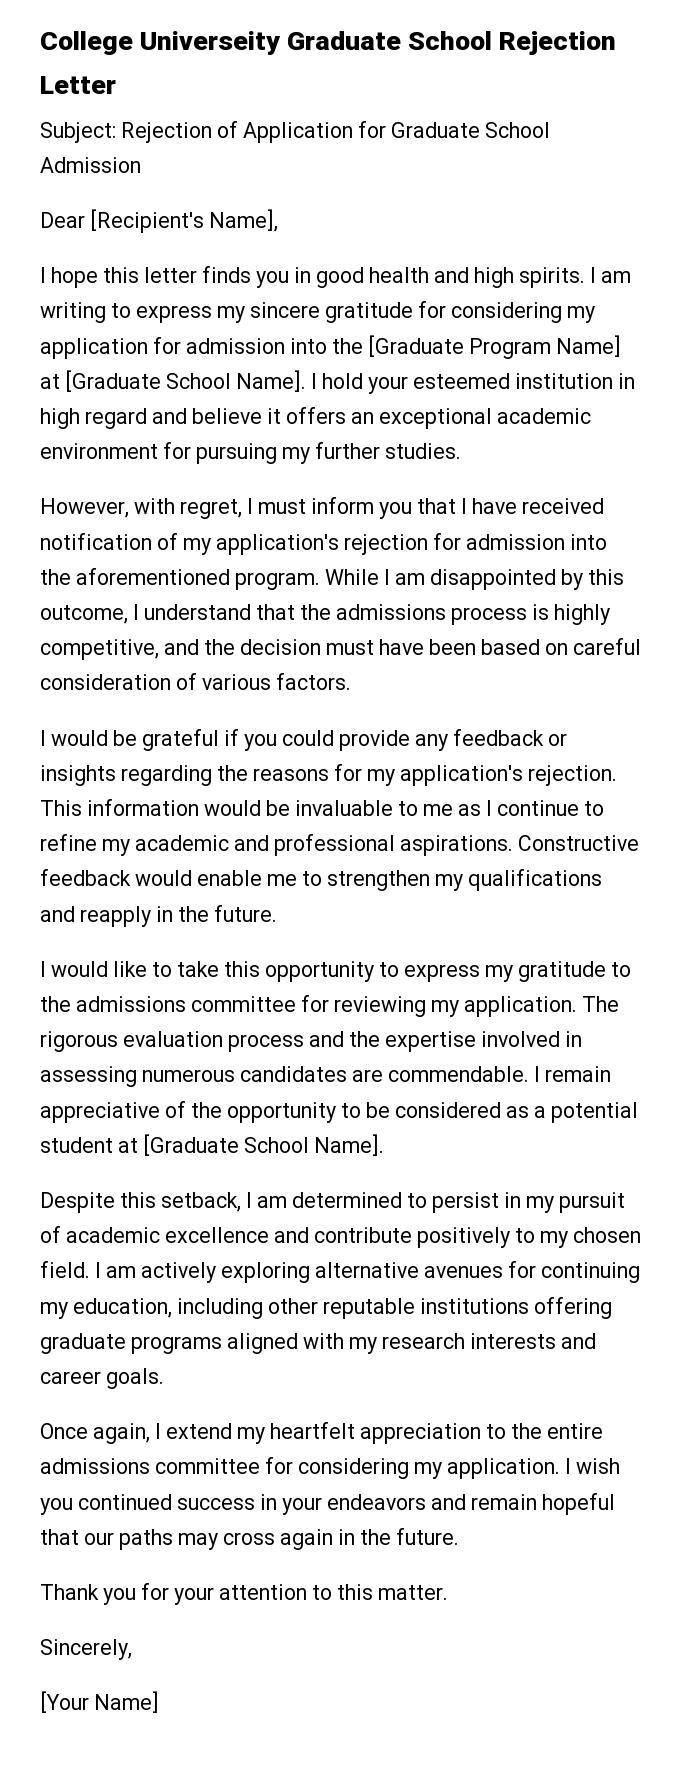 College Universeity Graduate School Rejection Letter